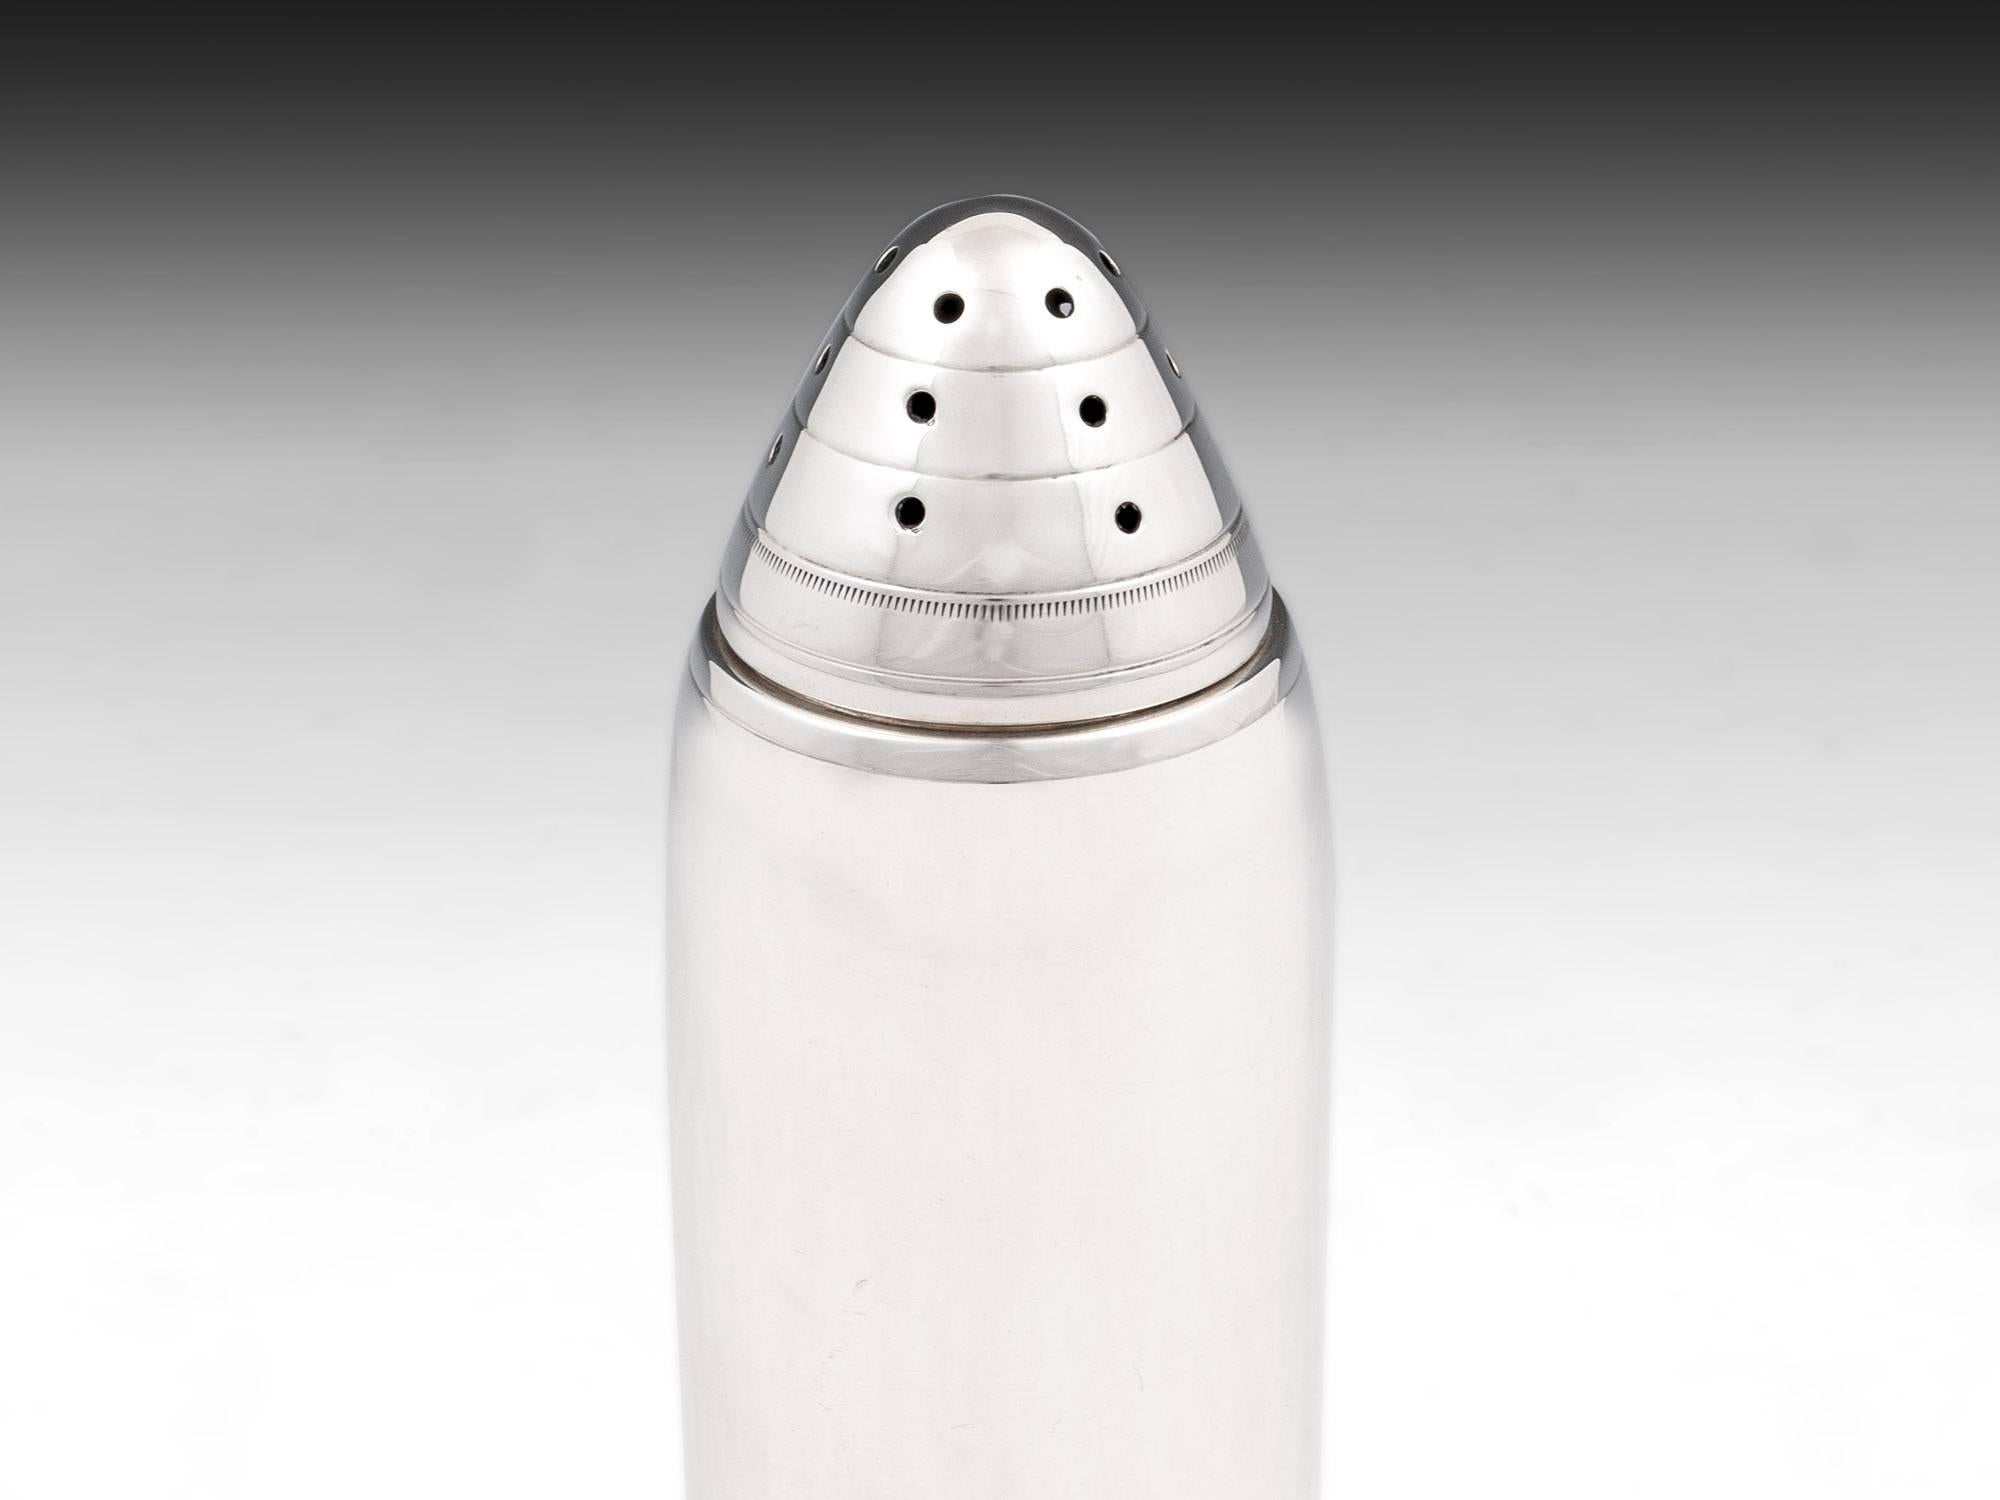 Sterling Silver Novelty sugar shaker in the form of an artillery shell, by Birmingham Silversmiths Stuart Dawson & Co Ltd.